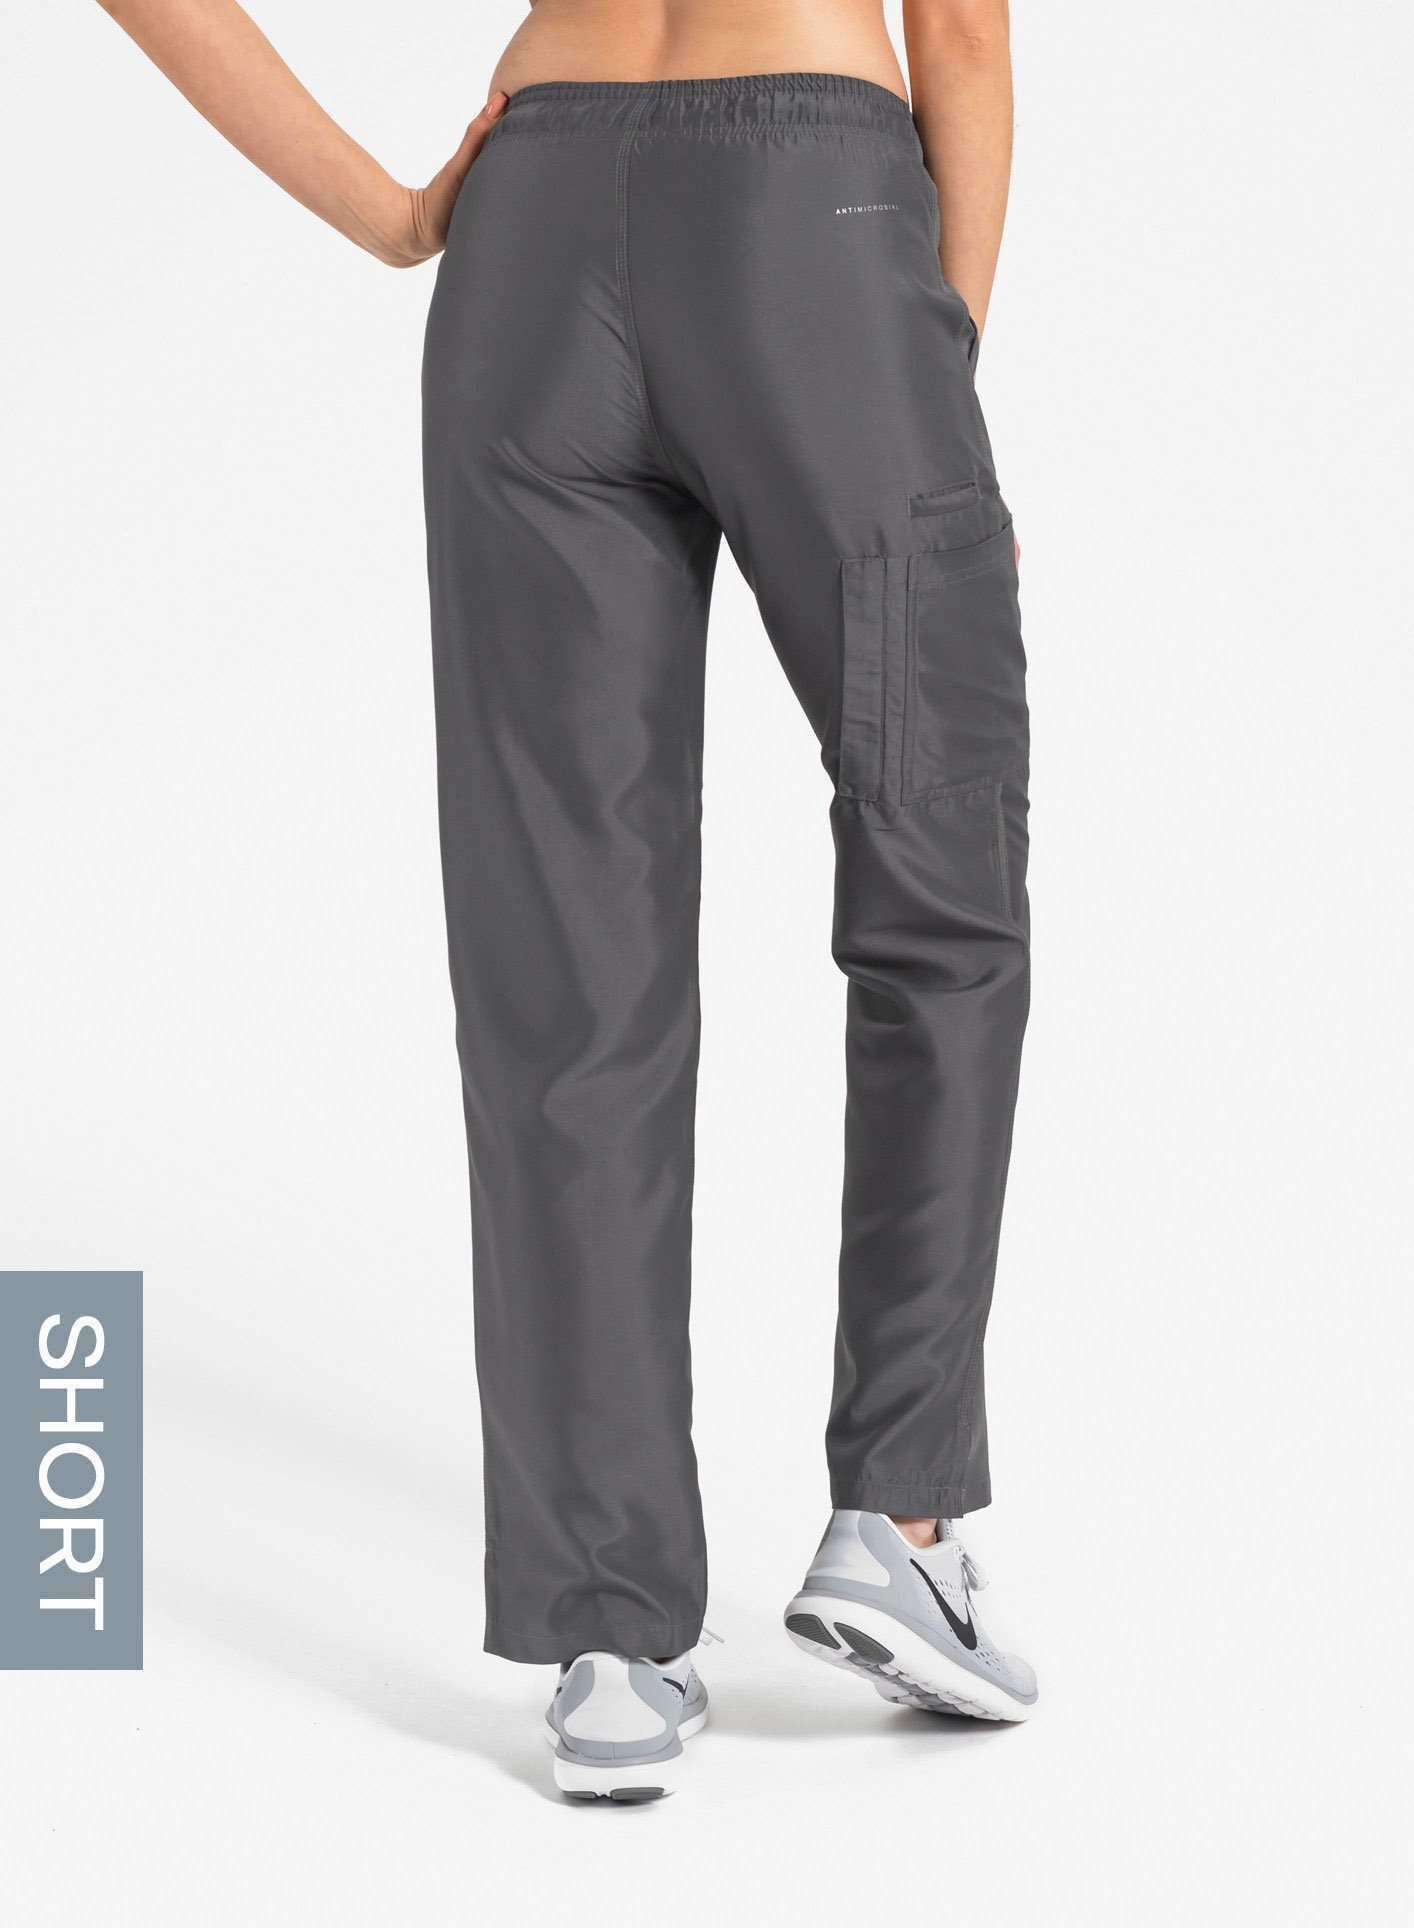 womens short cargo pocket straight leg scrub pants dark gray